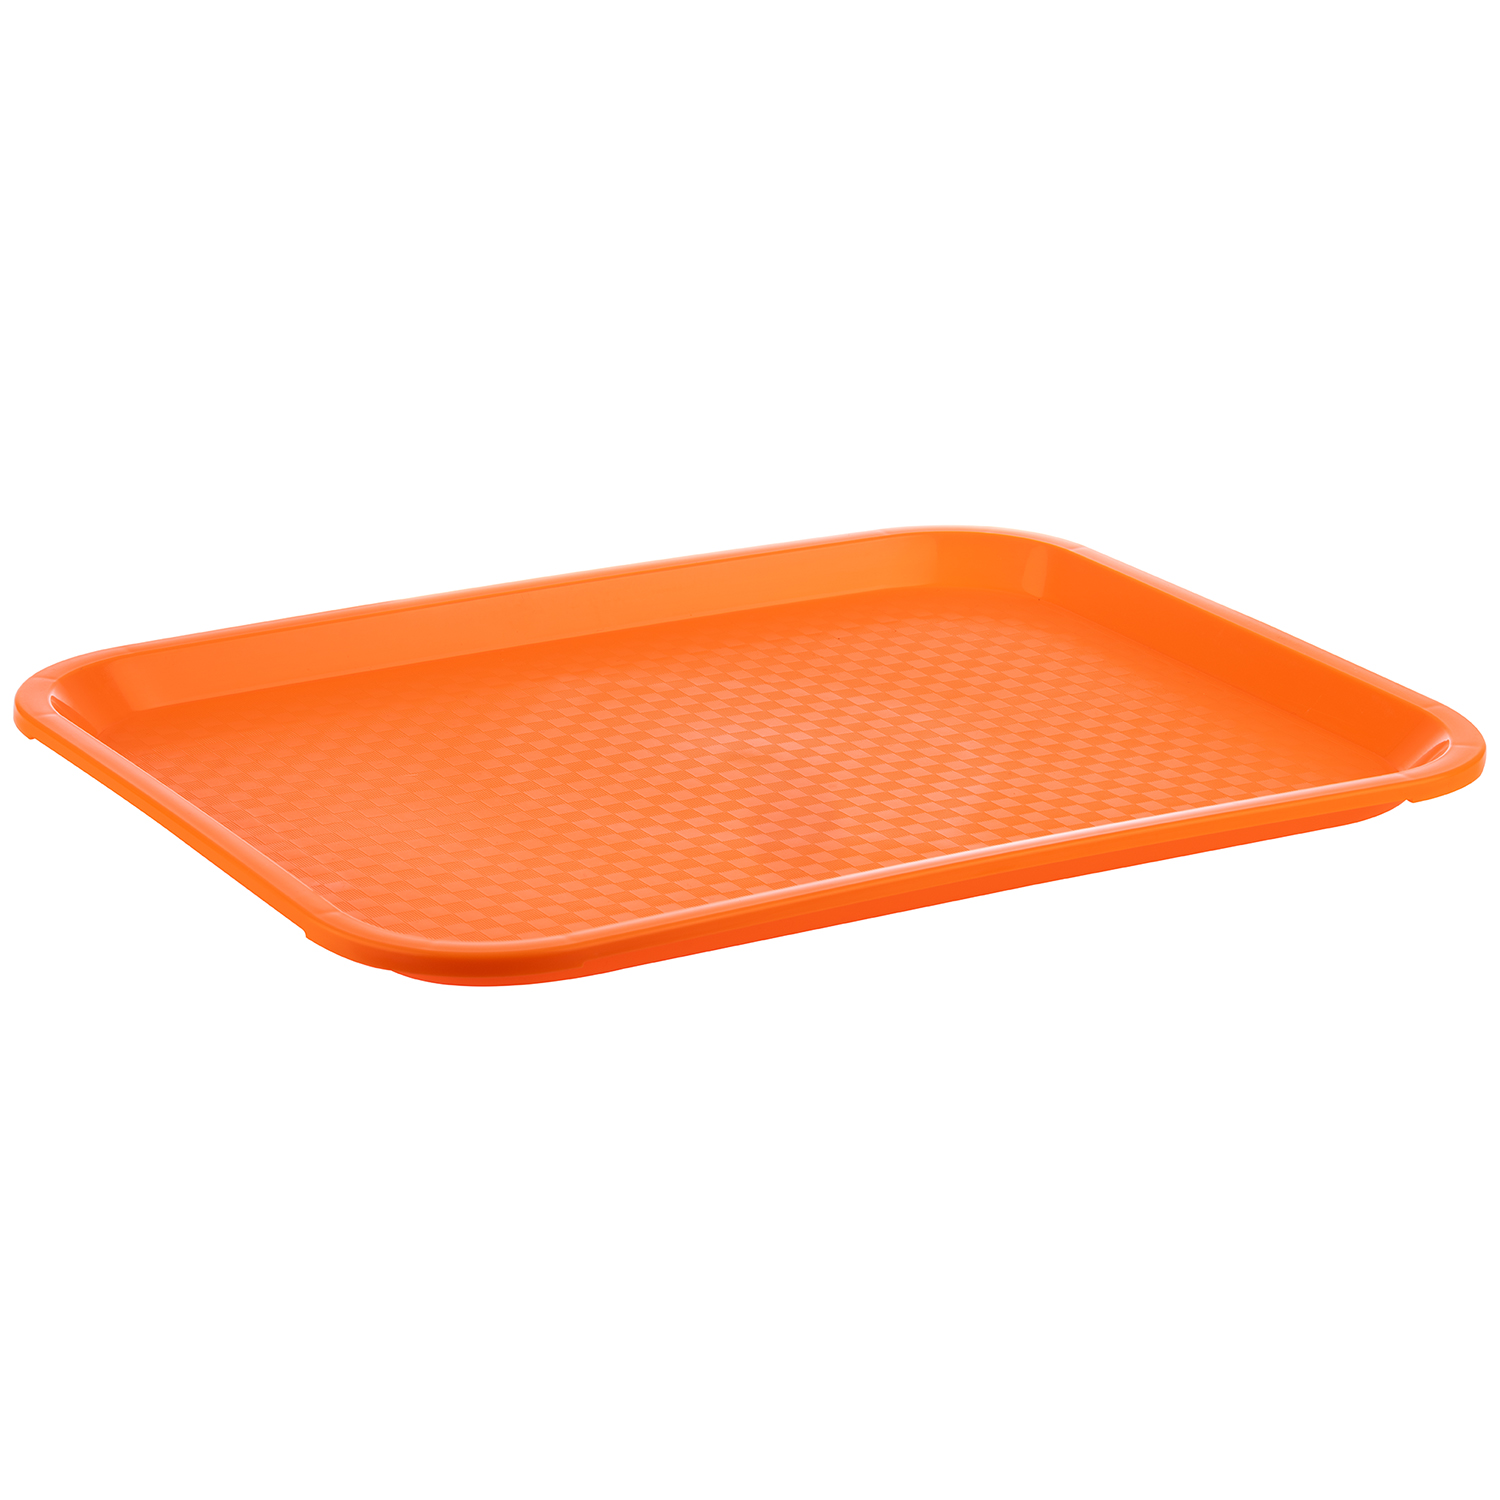 Fast Food-Tablett, orange, 35 x 27 cm, H: 2 cm                  